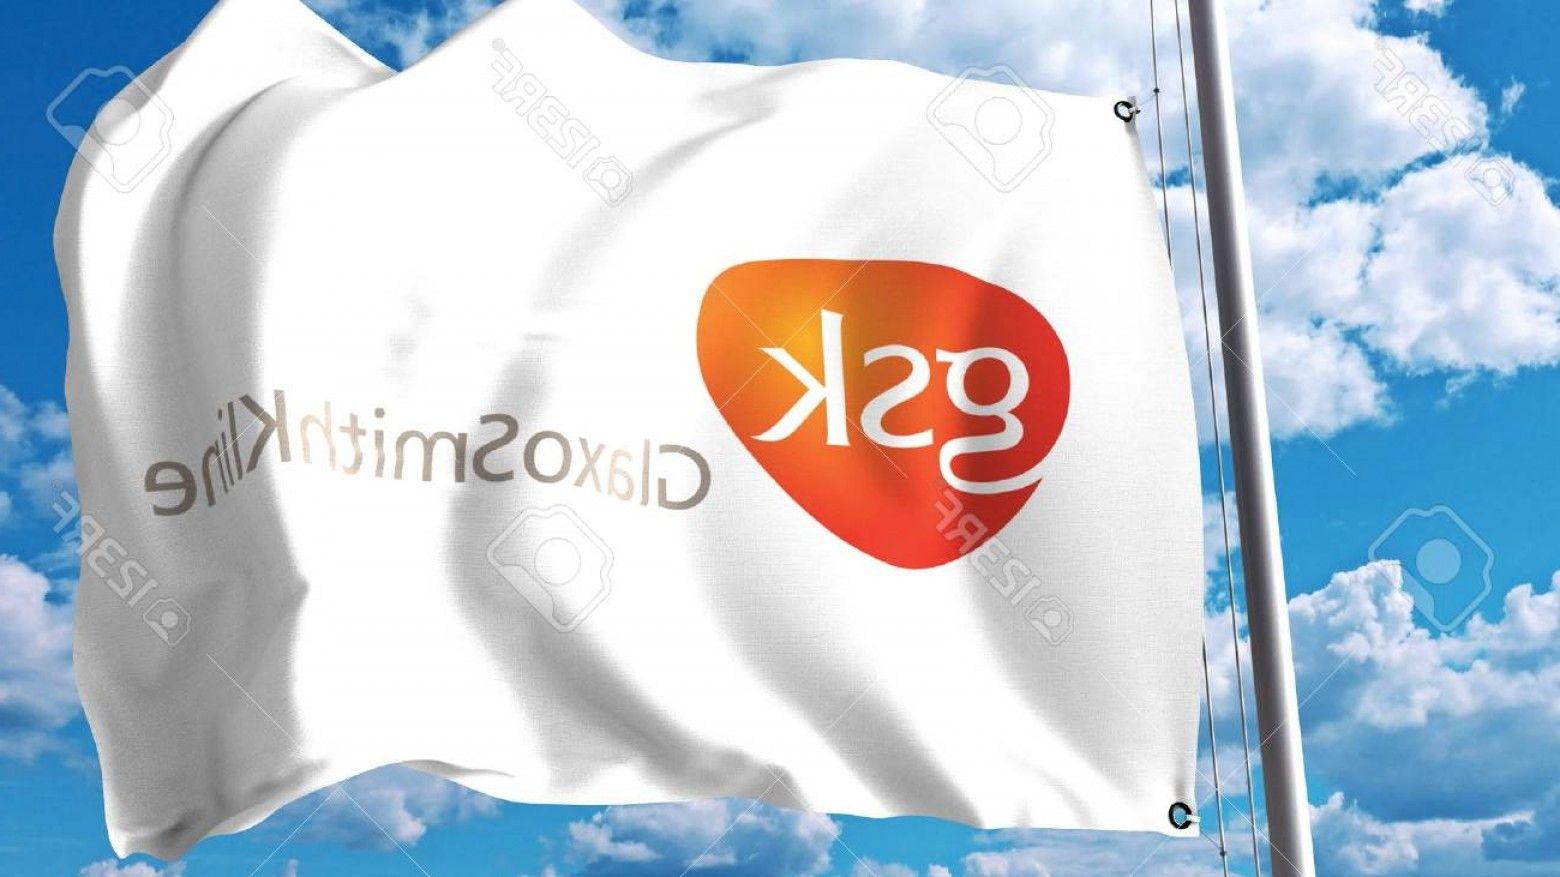 GlaxoSmithKline Logo - Photowaving Flag With Glaxosmithkline Gsk Logo Against Clouds And ...